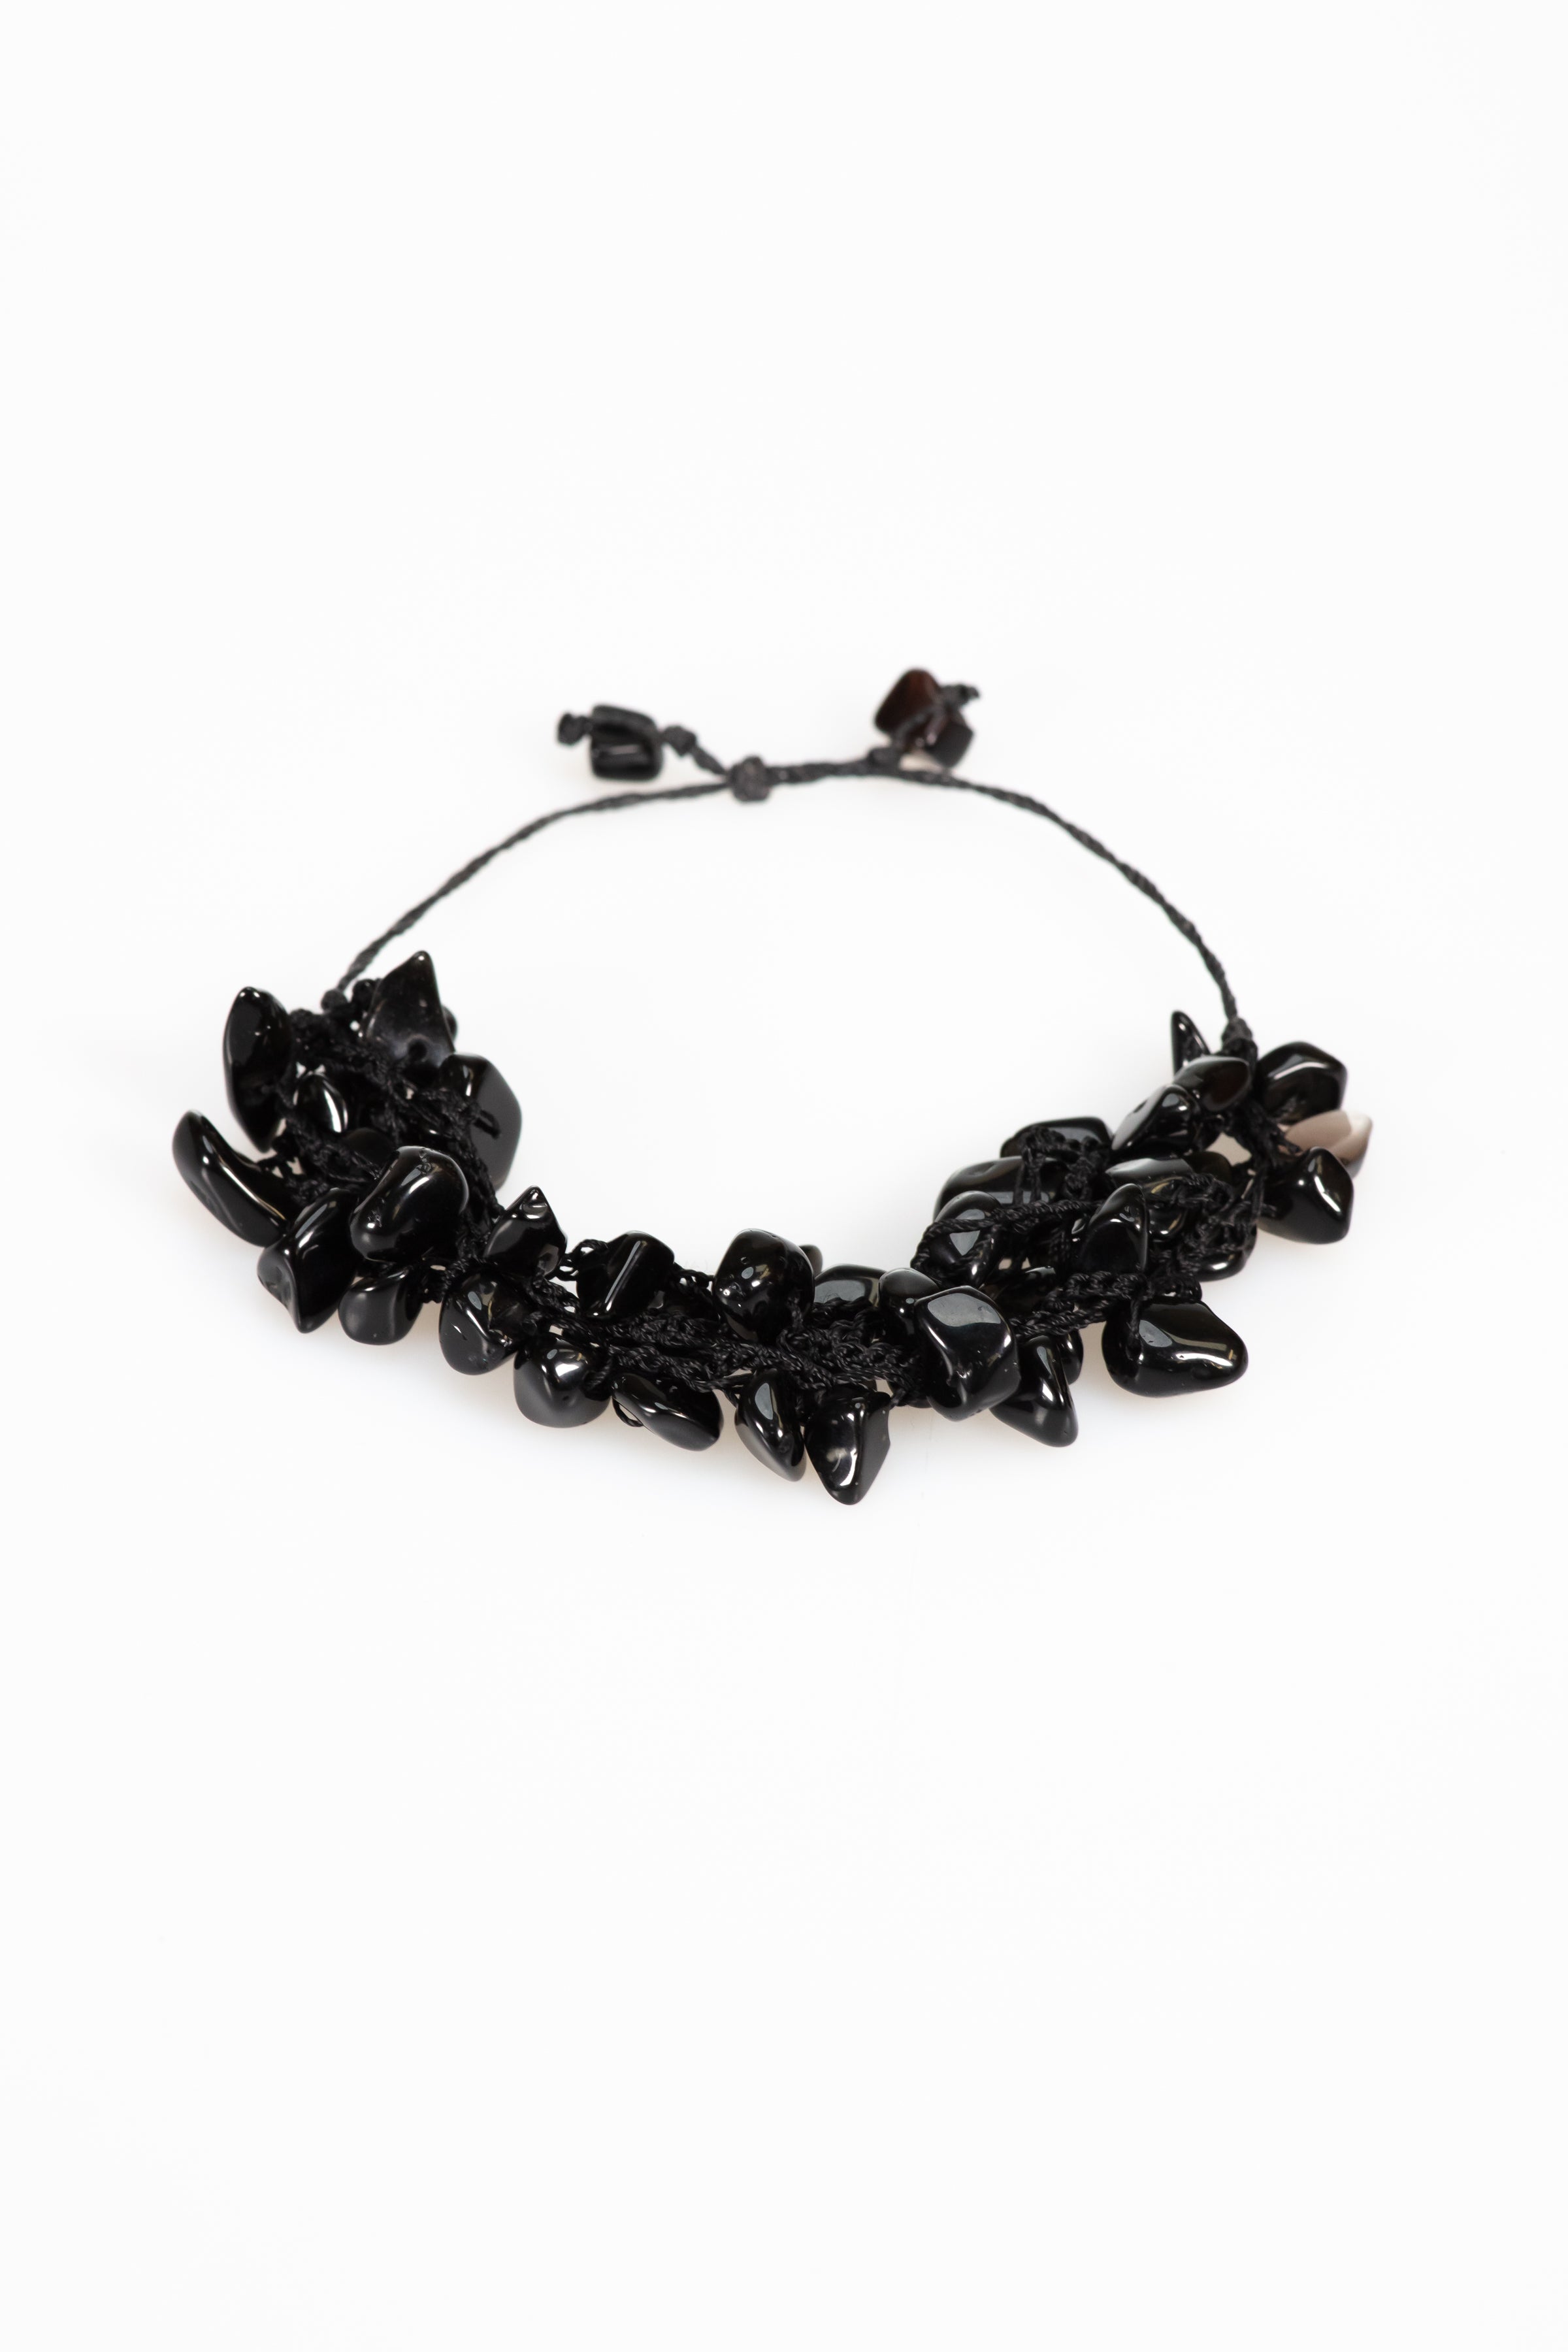 Black Onyx Jewellery Set